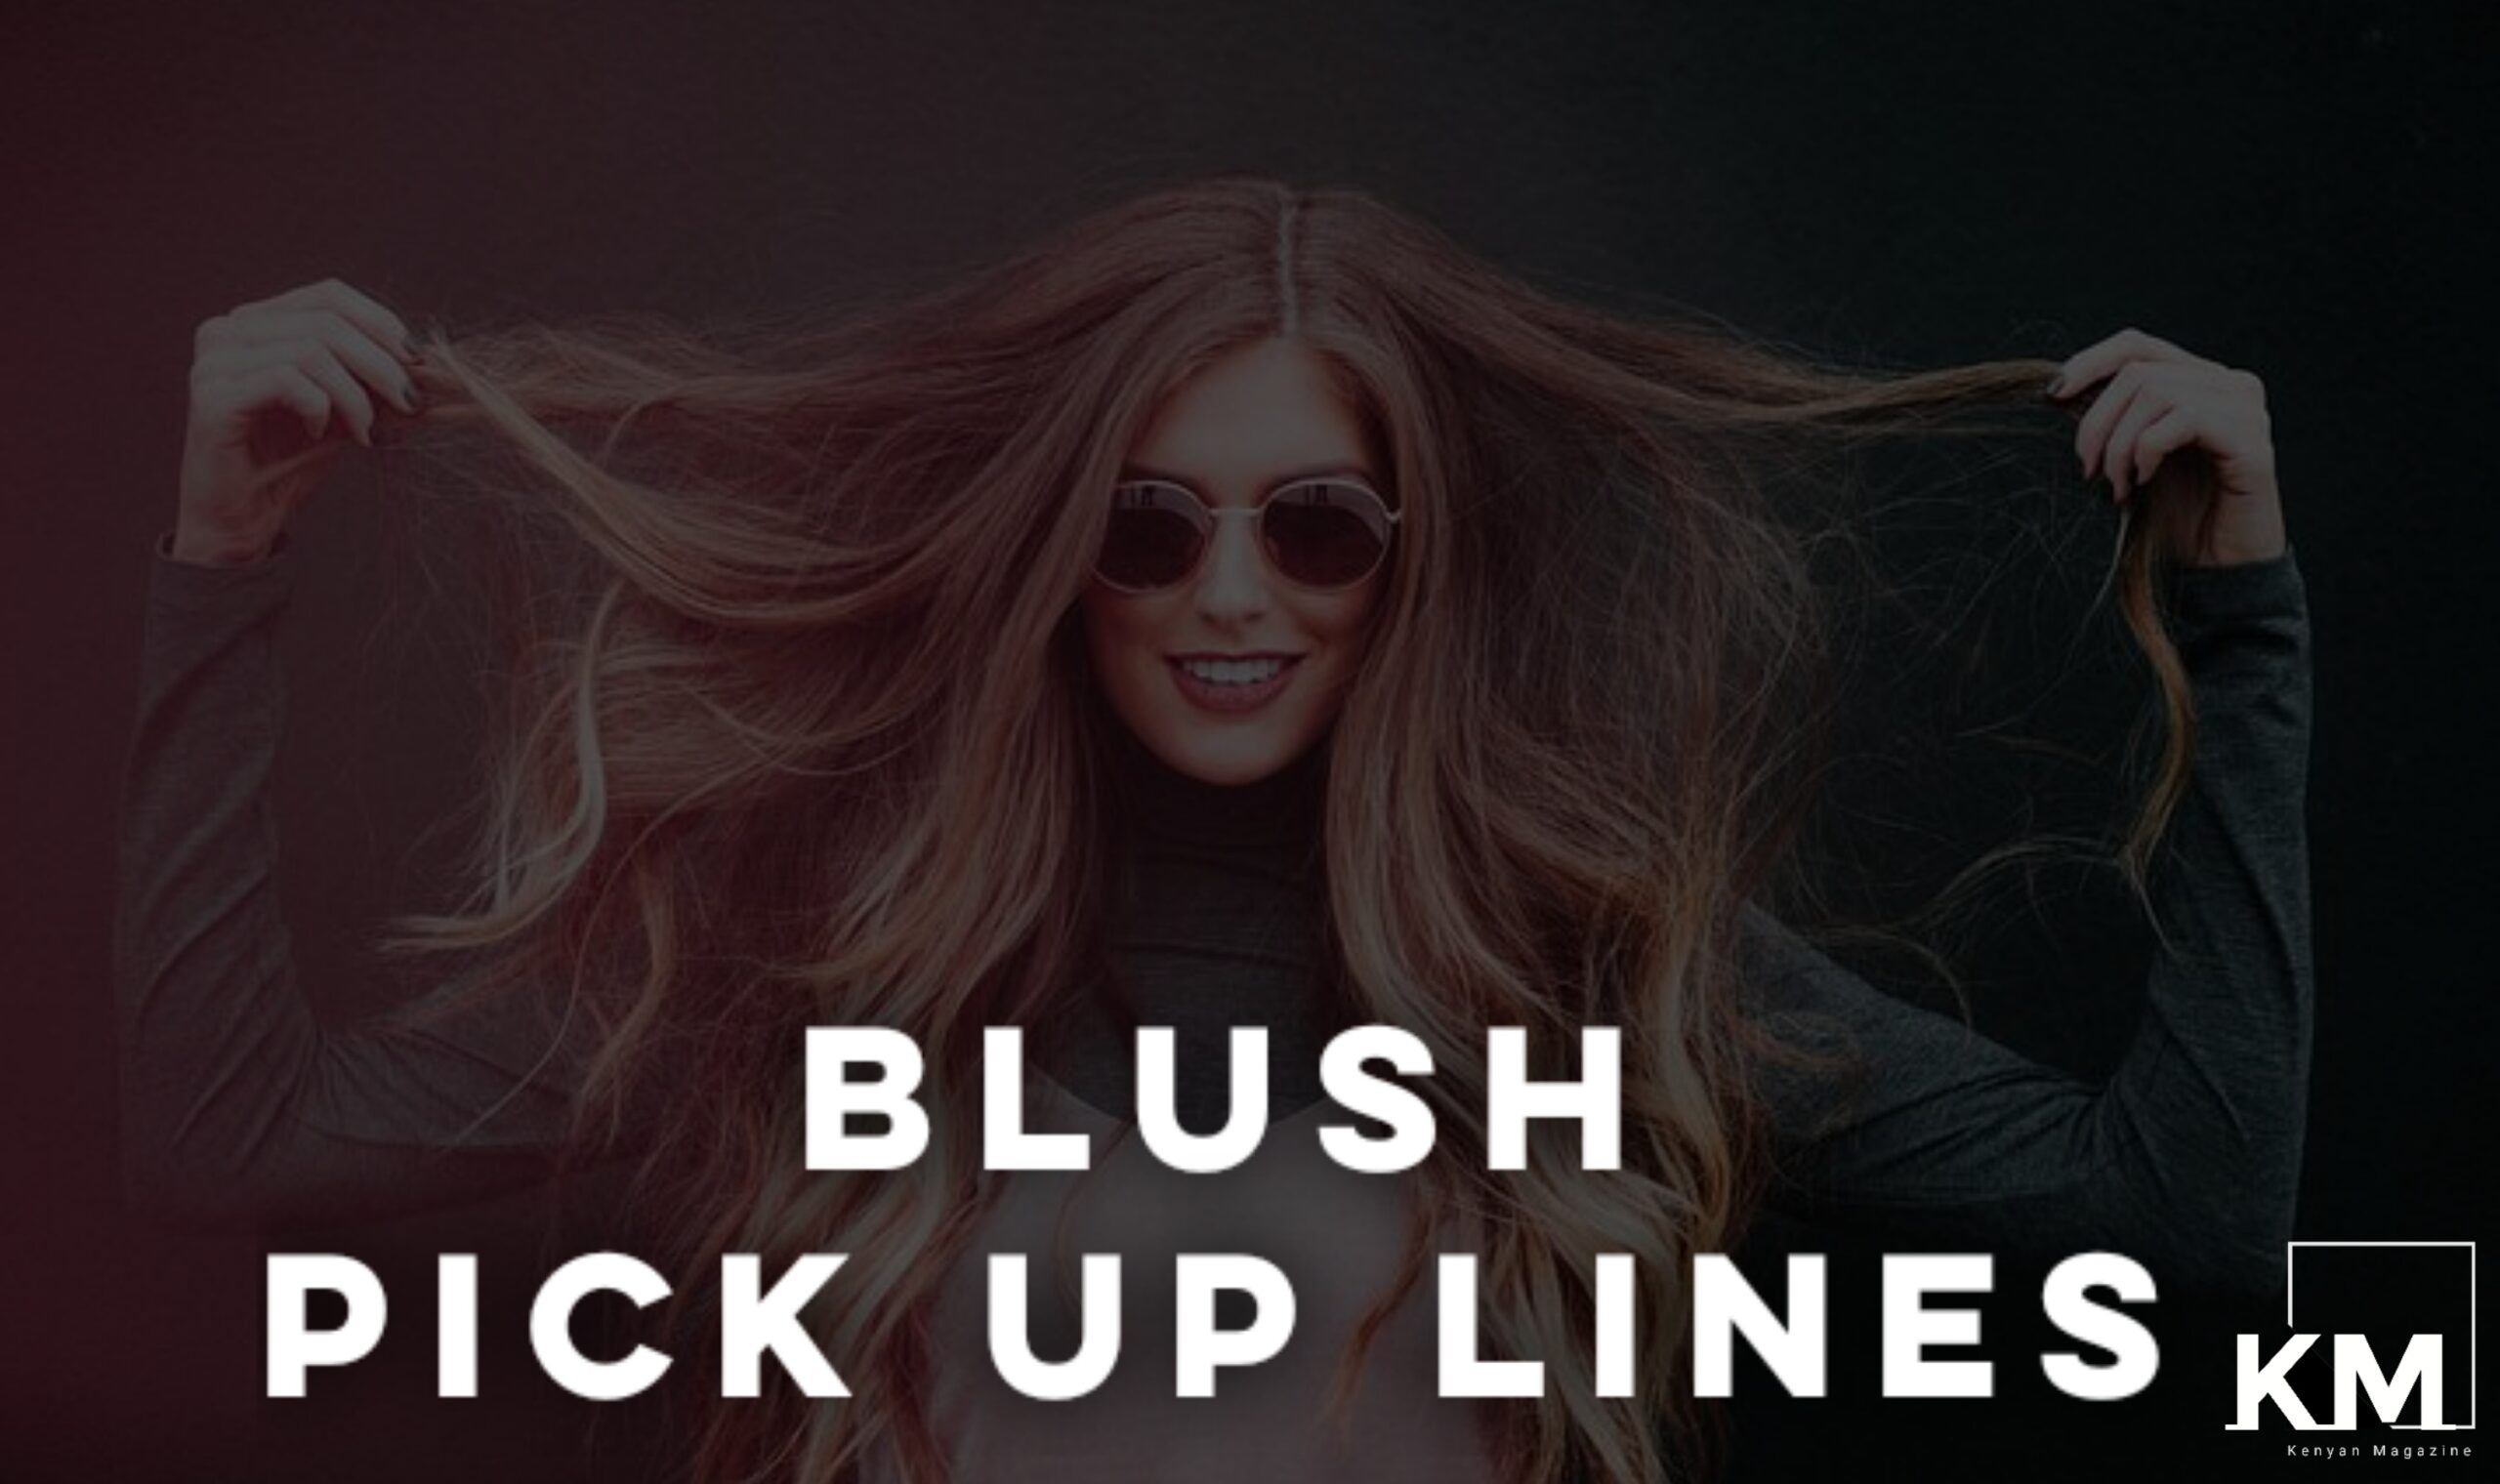 Blush pick up lines